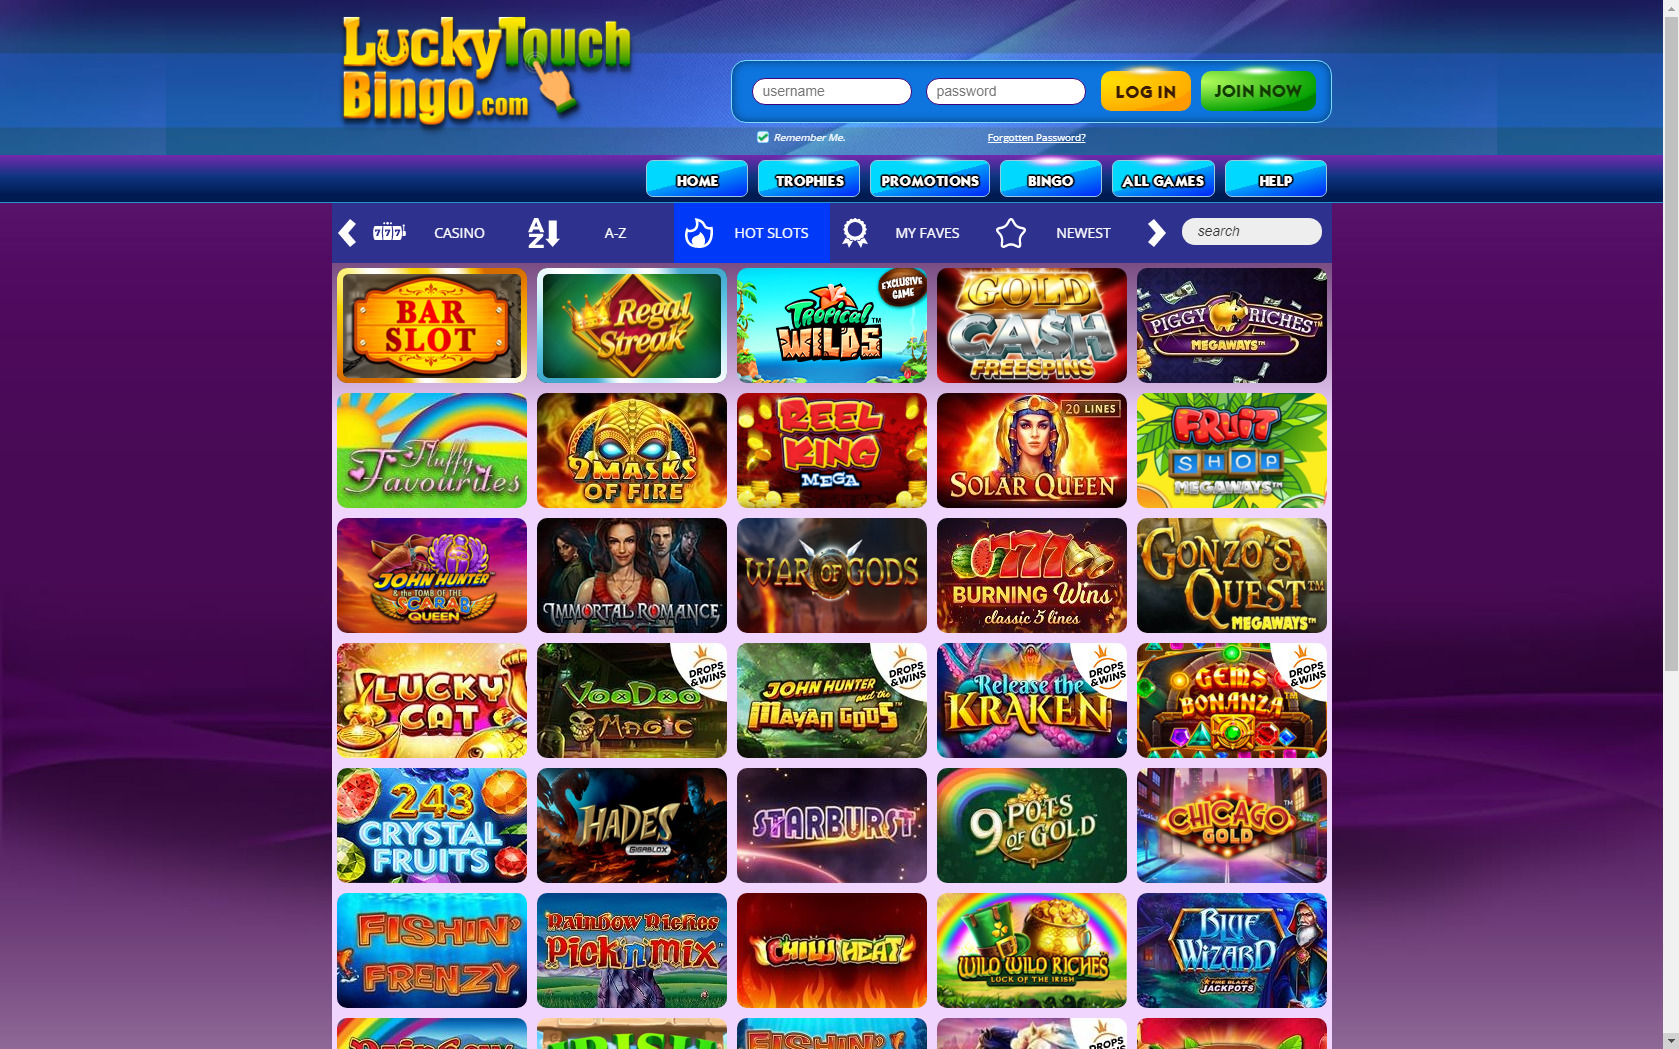 Lucky Touch Bingo Casino Games